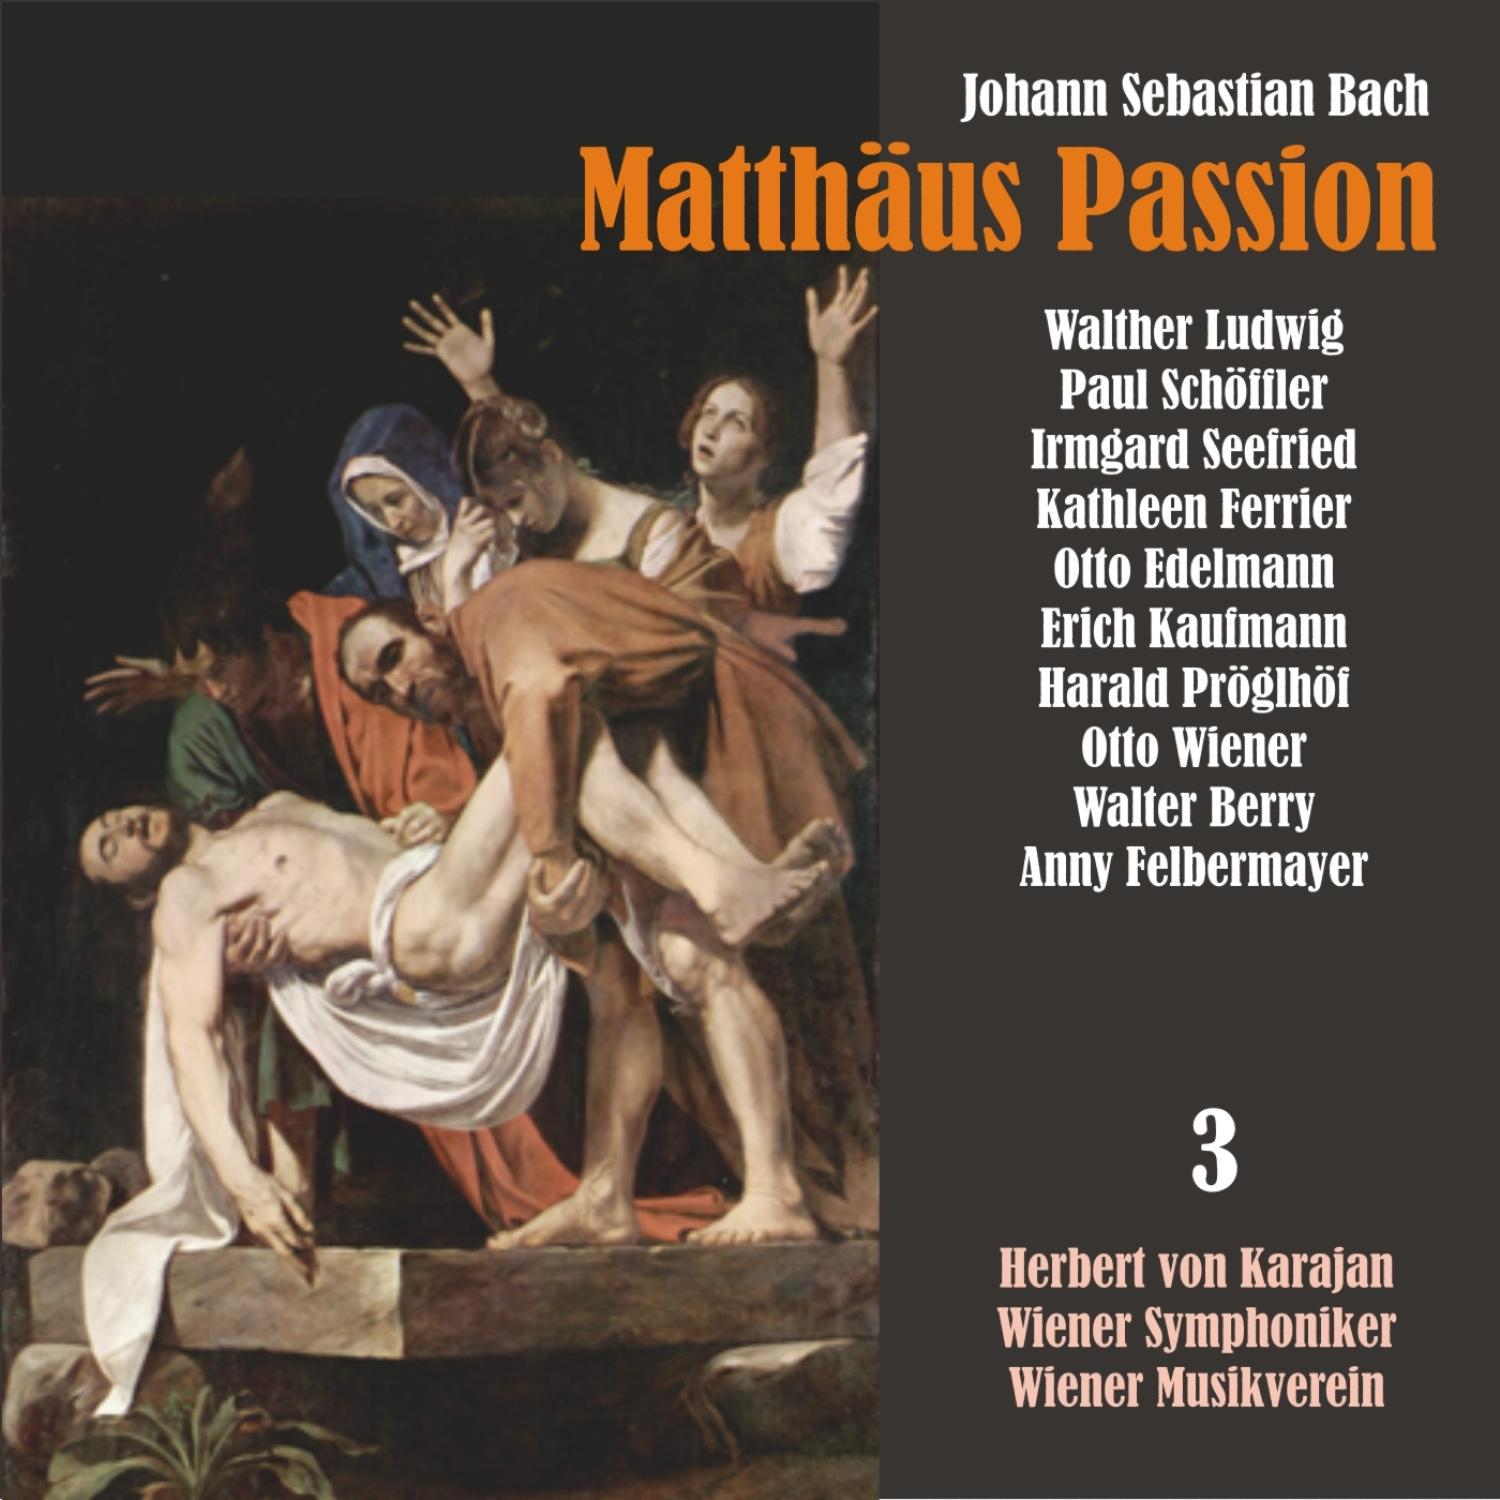 Matth us Passion, BWV 244: " Ach Gofgatha, unsel' ges Golgatha!"